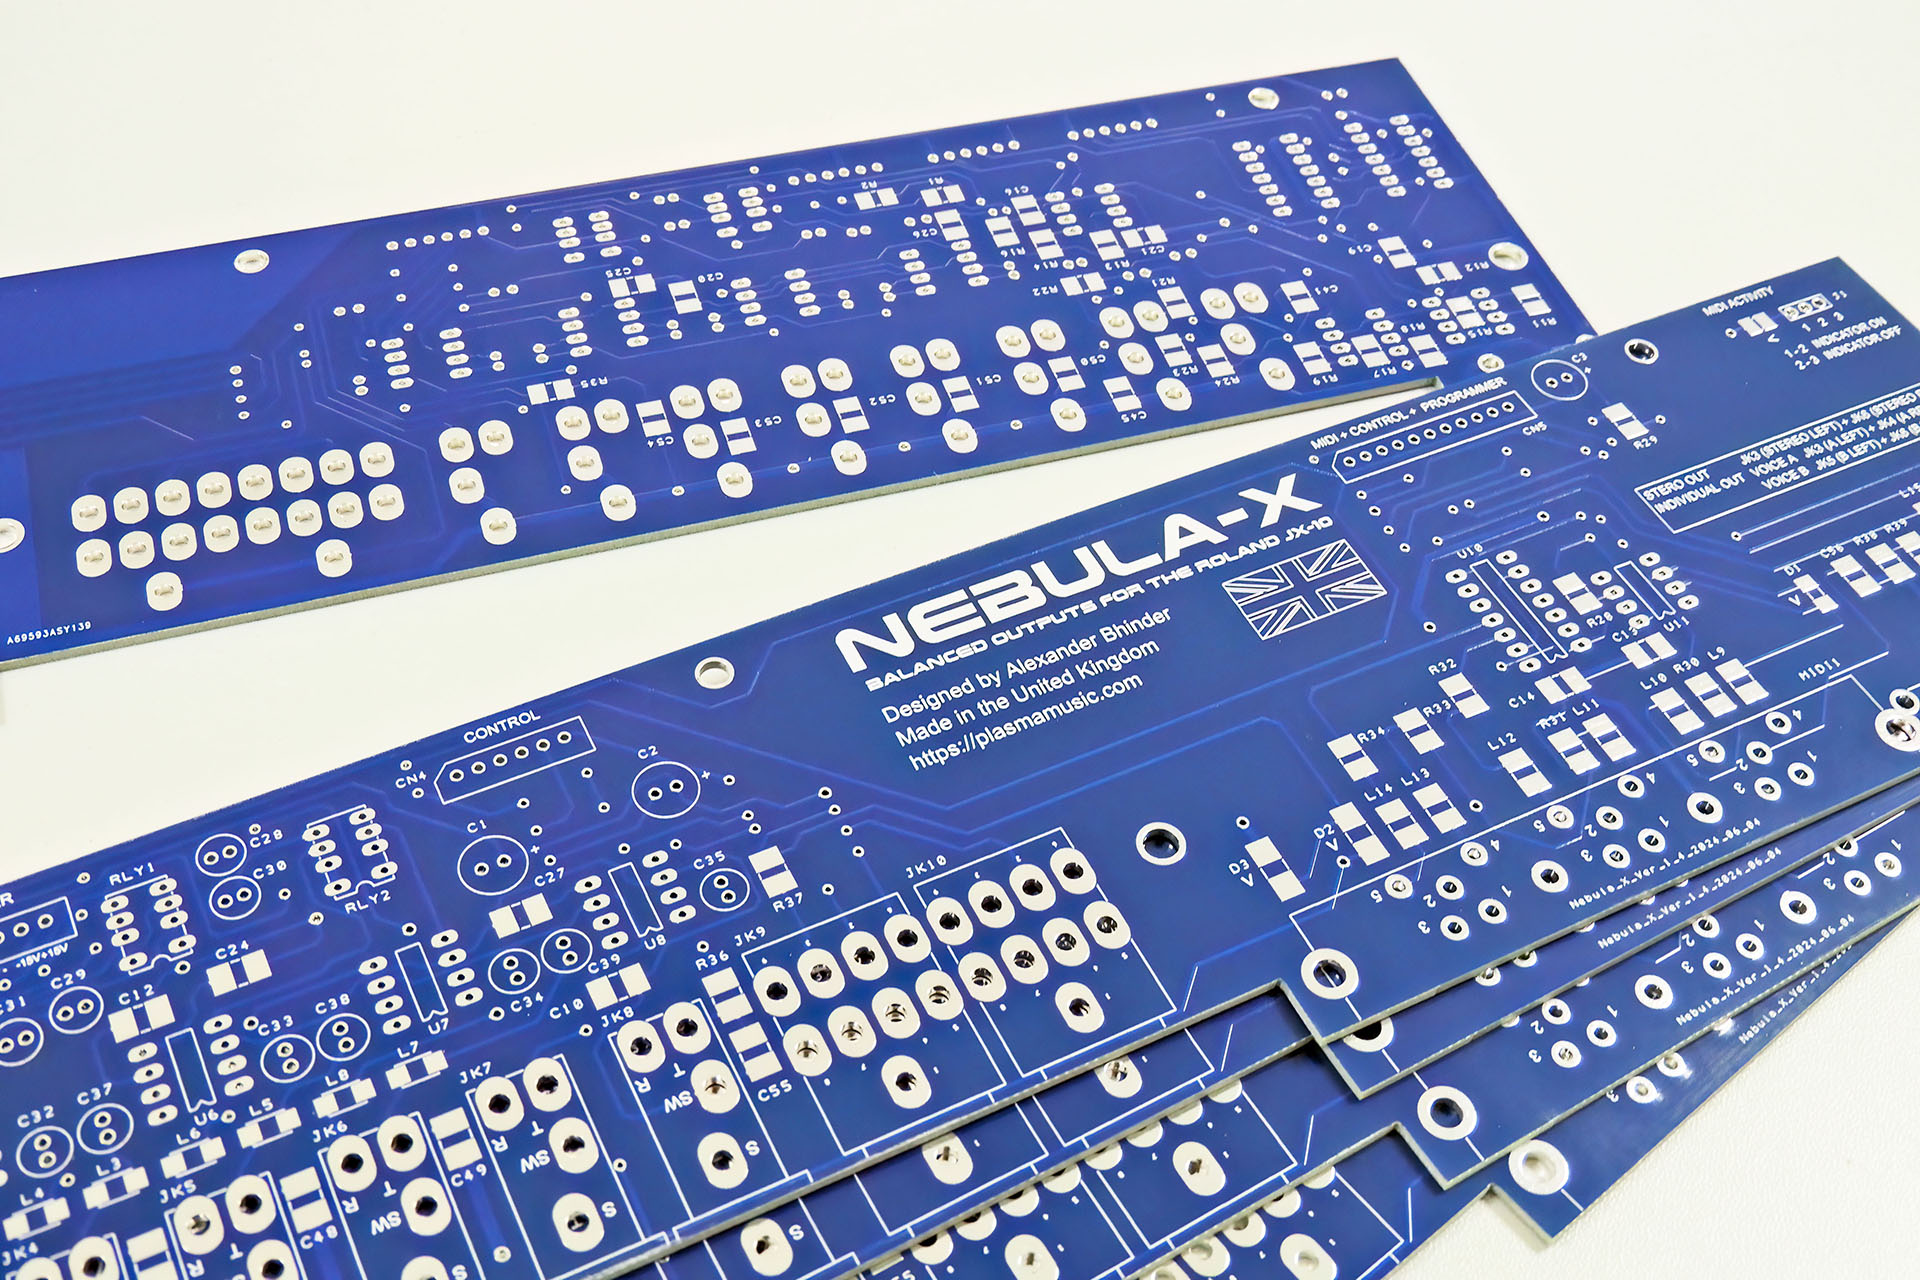 Nebula-X prototype PCBs just arrived